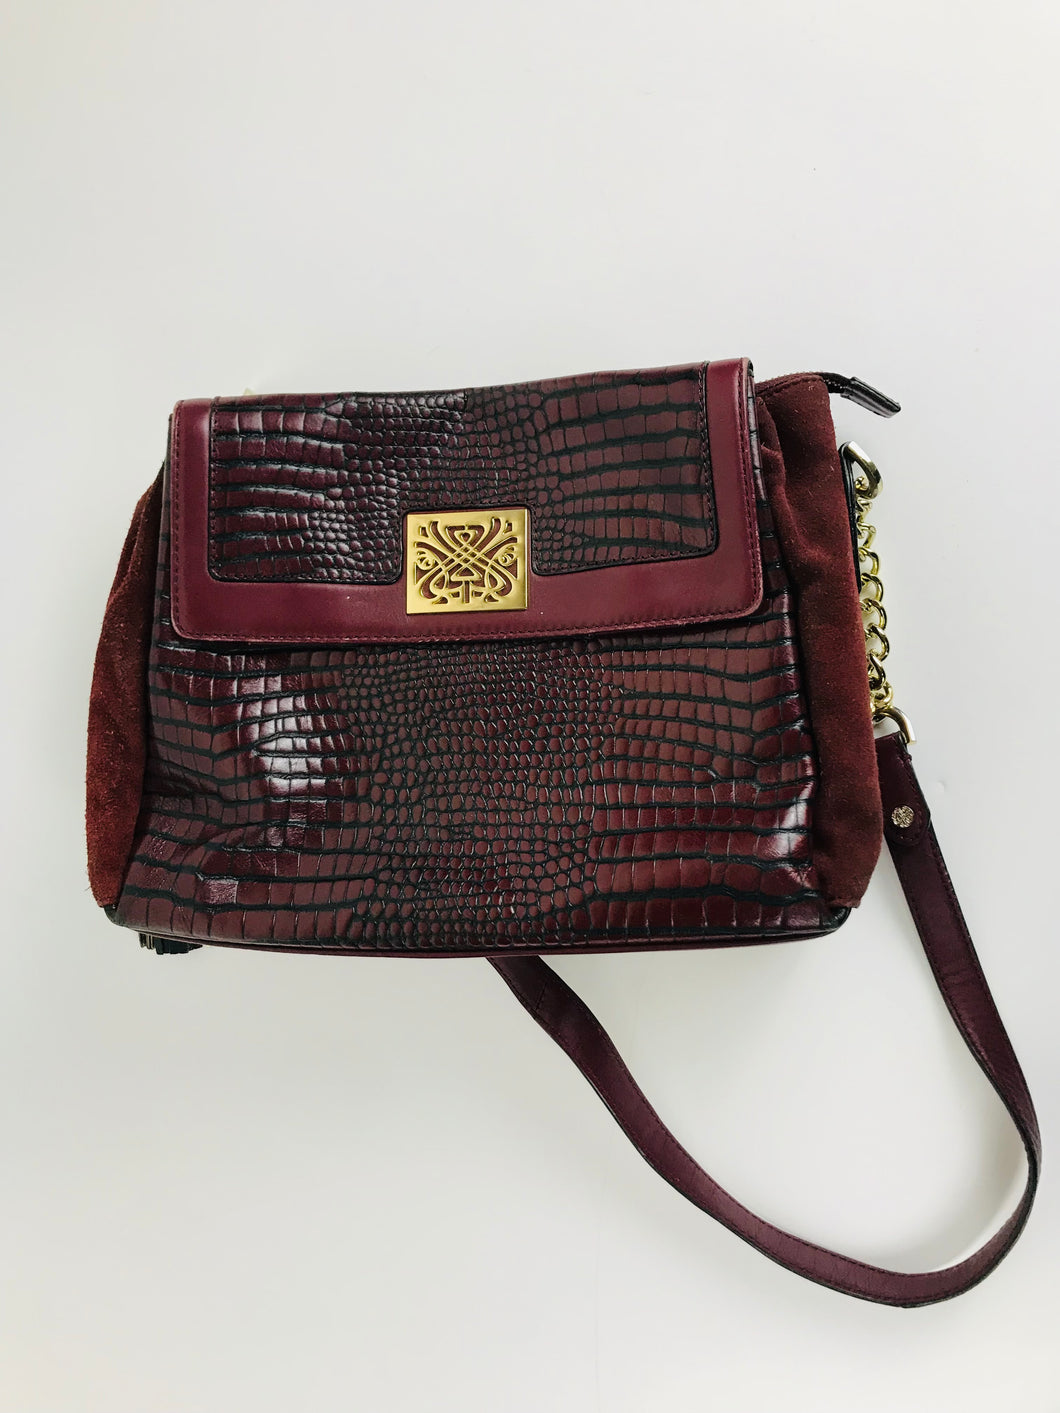 Biba Women's Leather Croc Shoulder Bag | S UK8 | Red